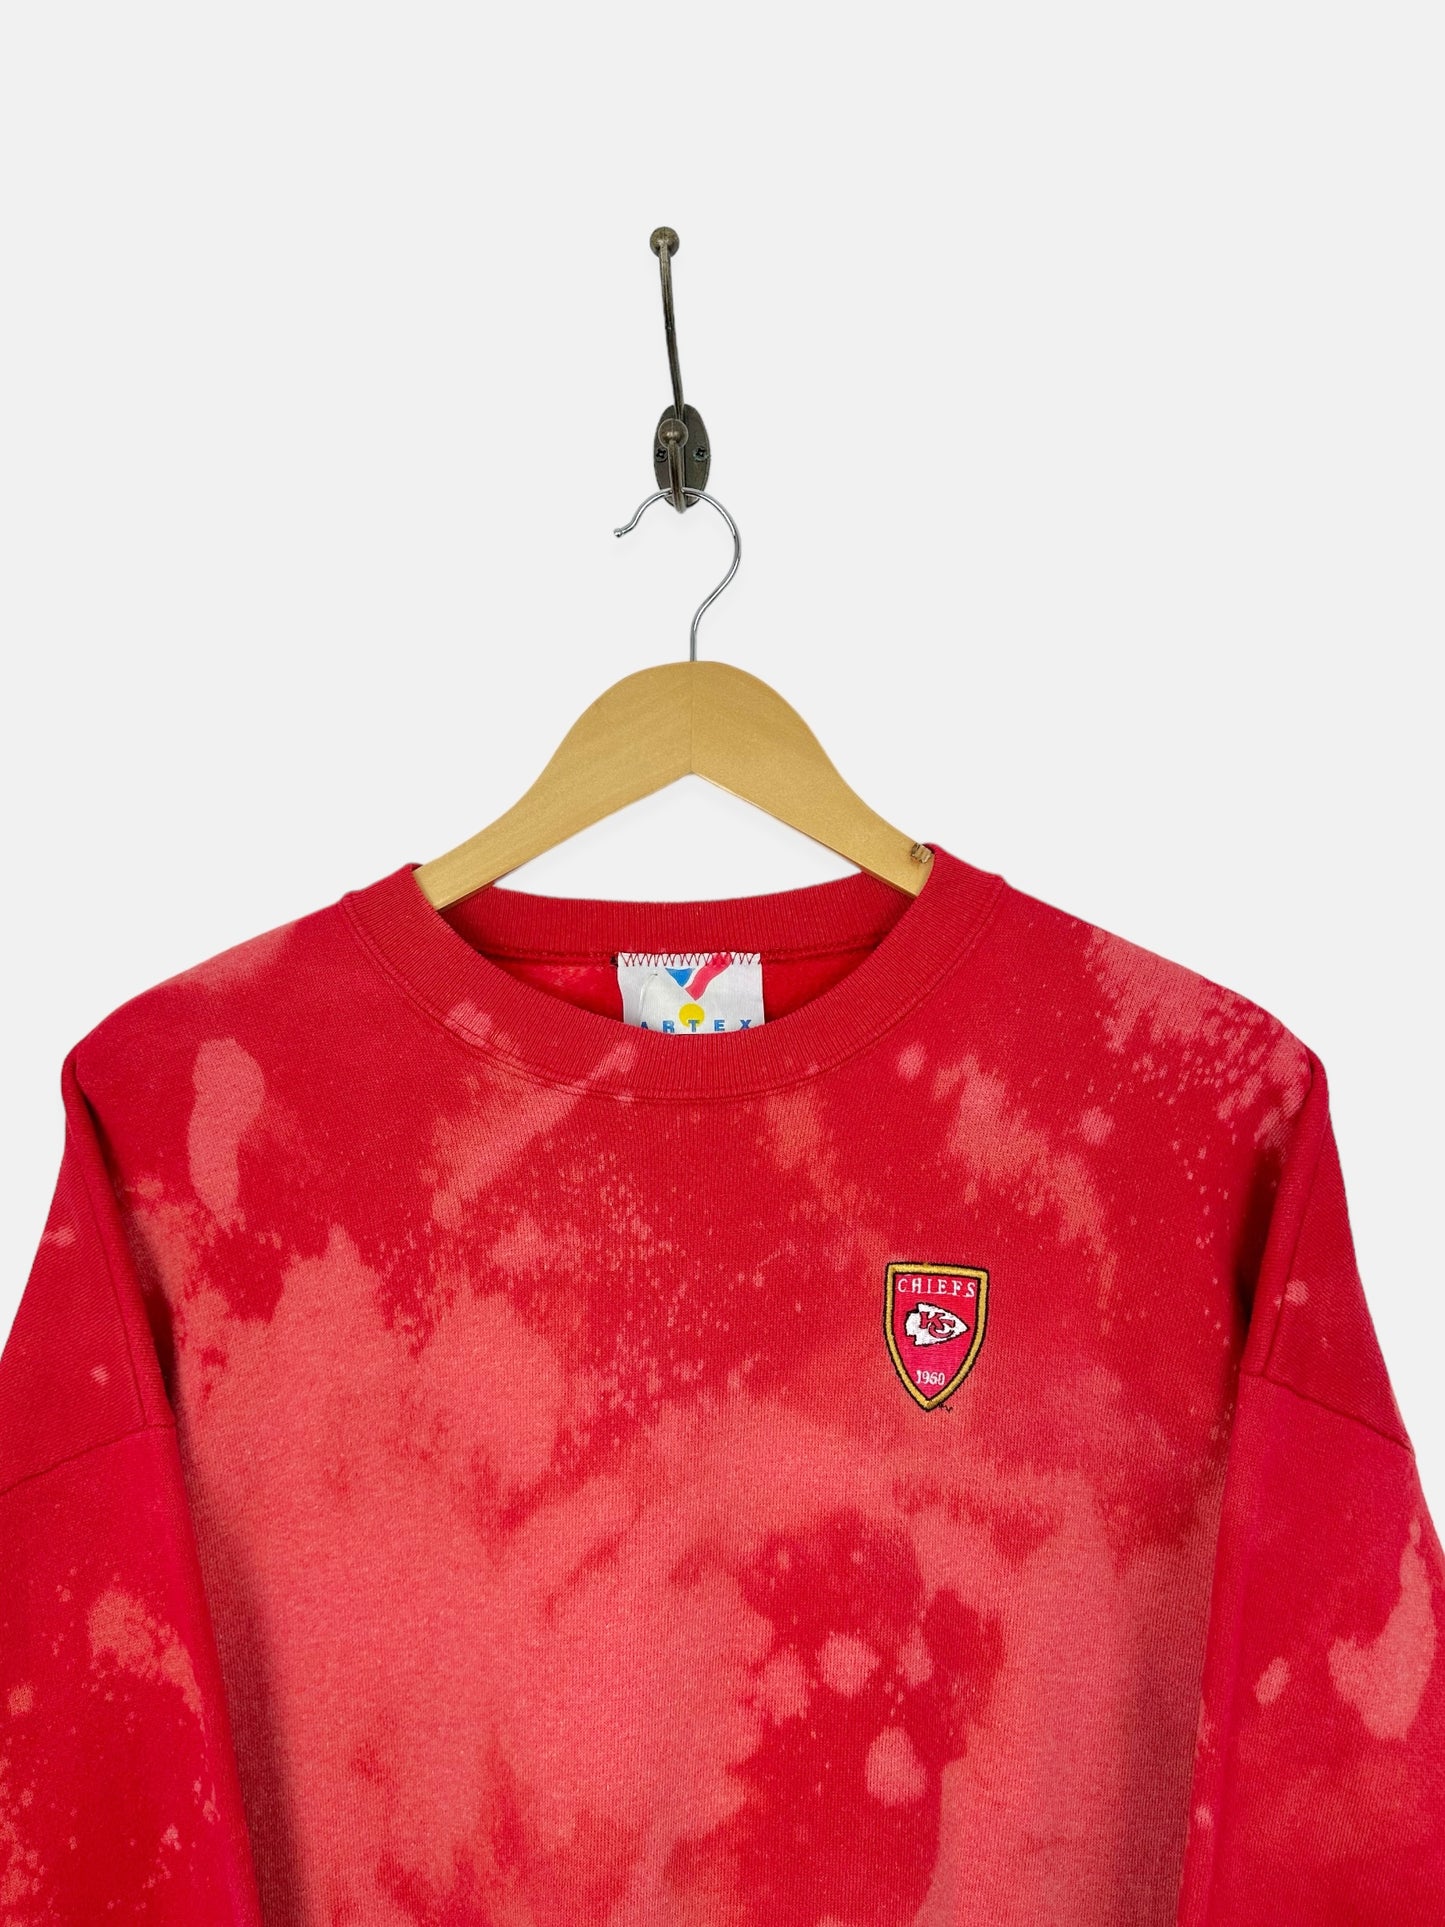 90's Kansas City Chiefs USA Made Embroidered Vintage Sweatshirt Size M